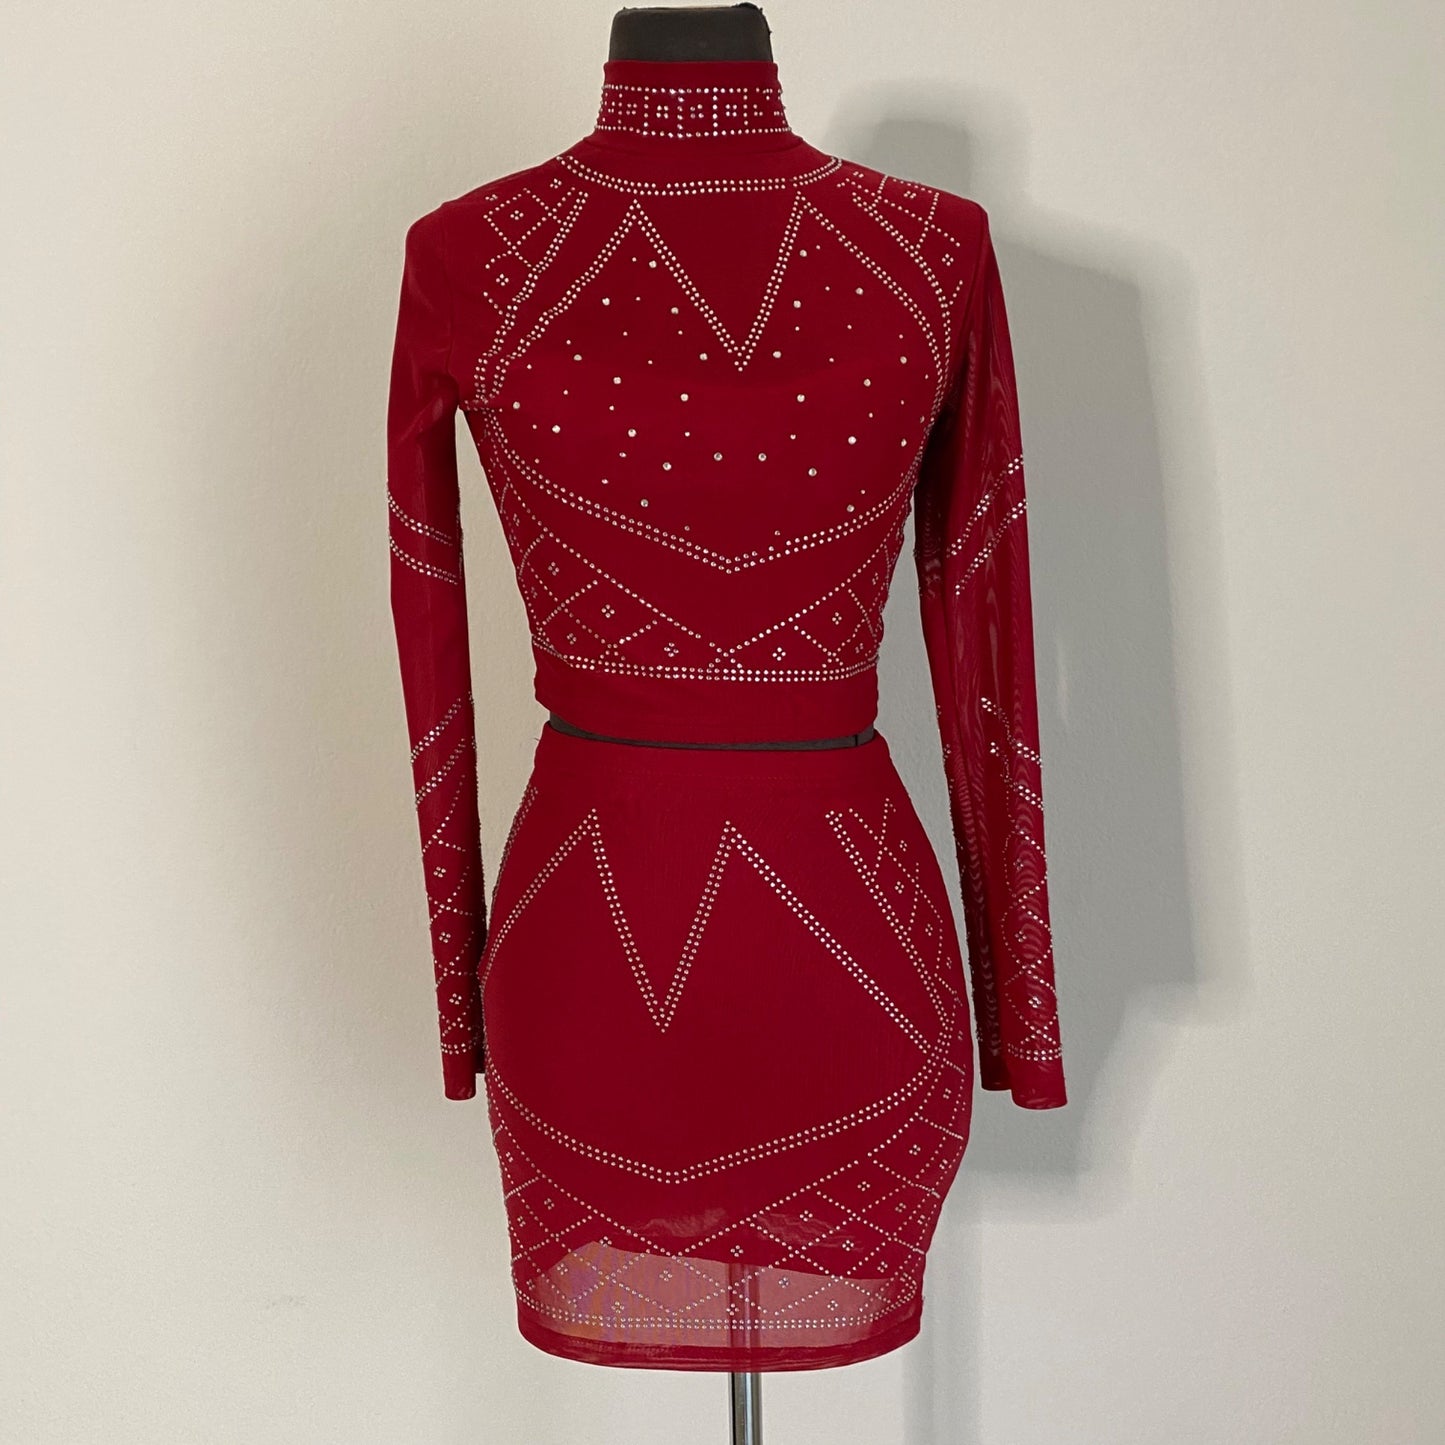 Glamaker sz S Crop top mini skirt Red stone studded set